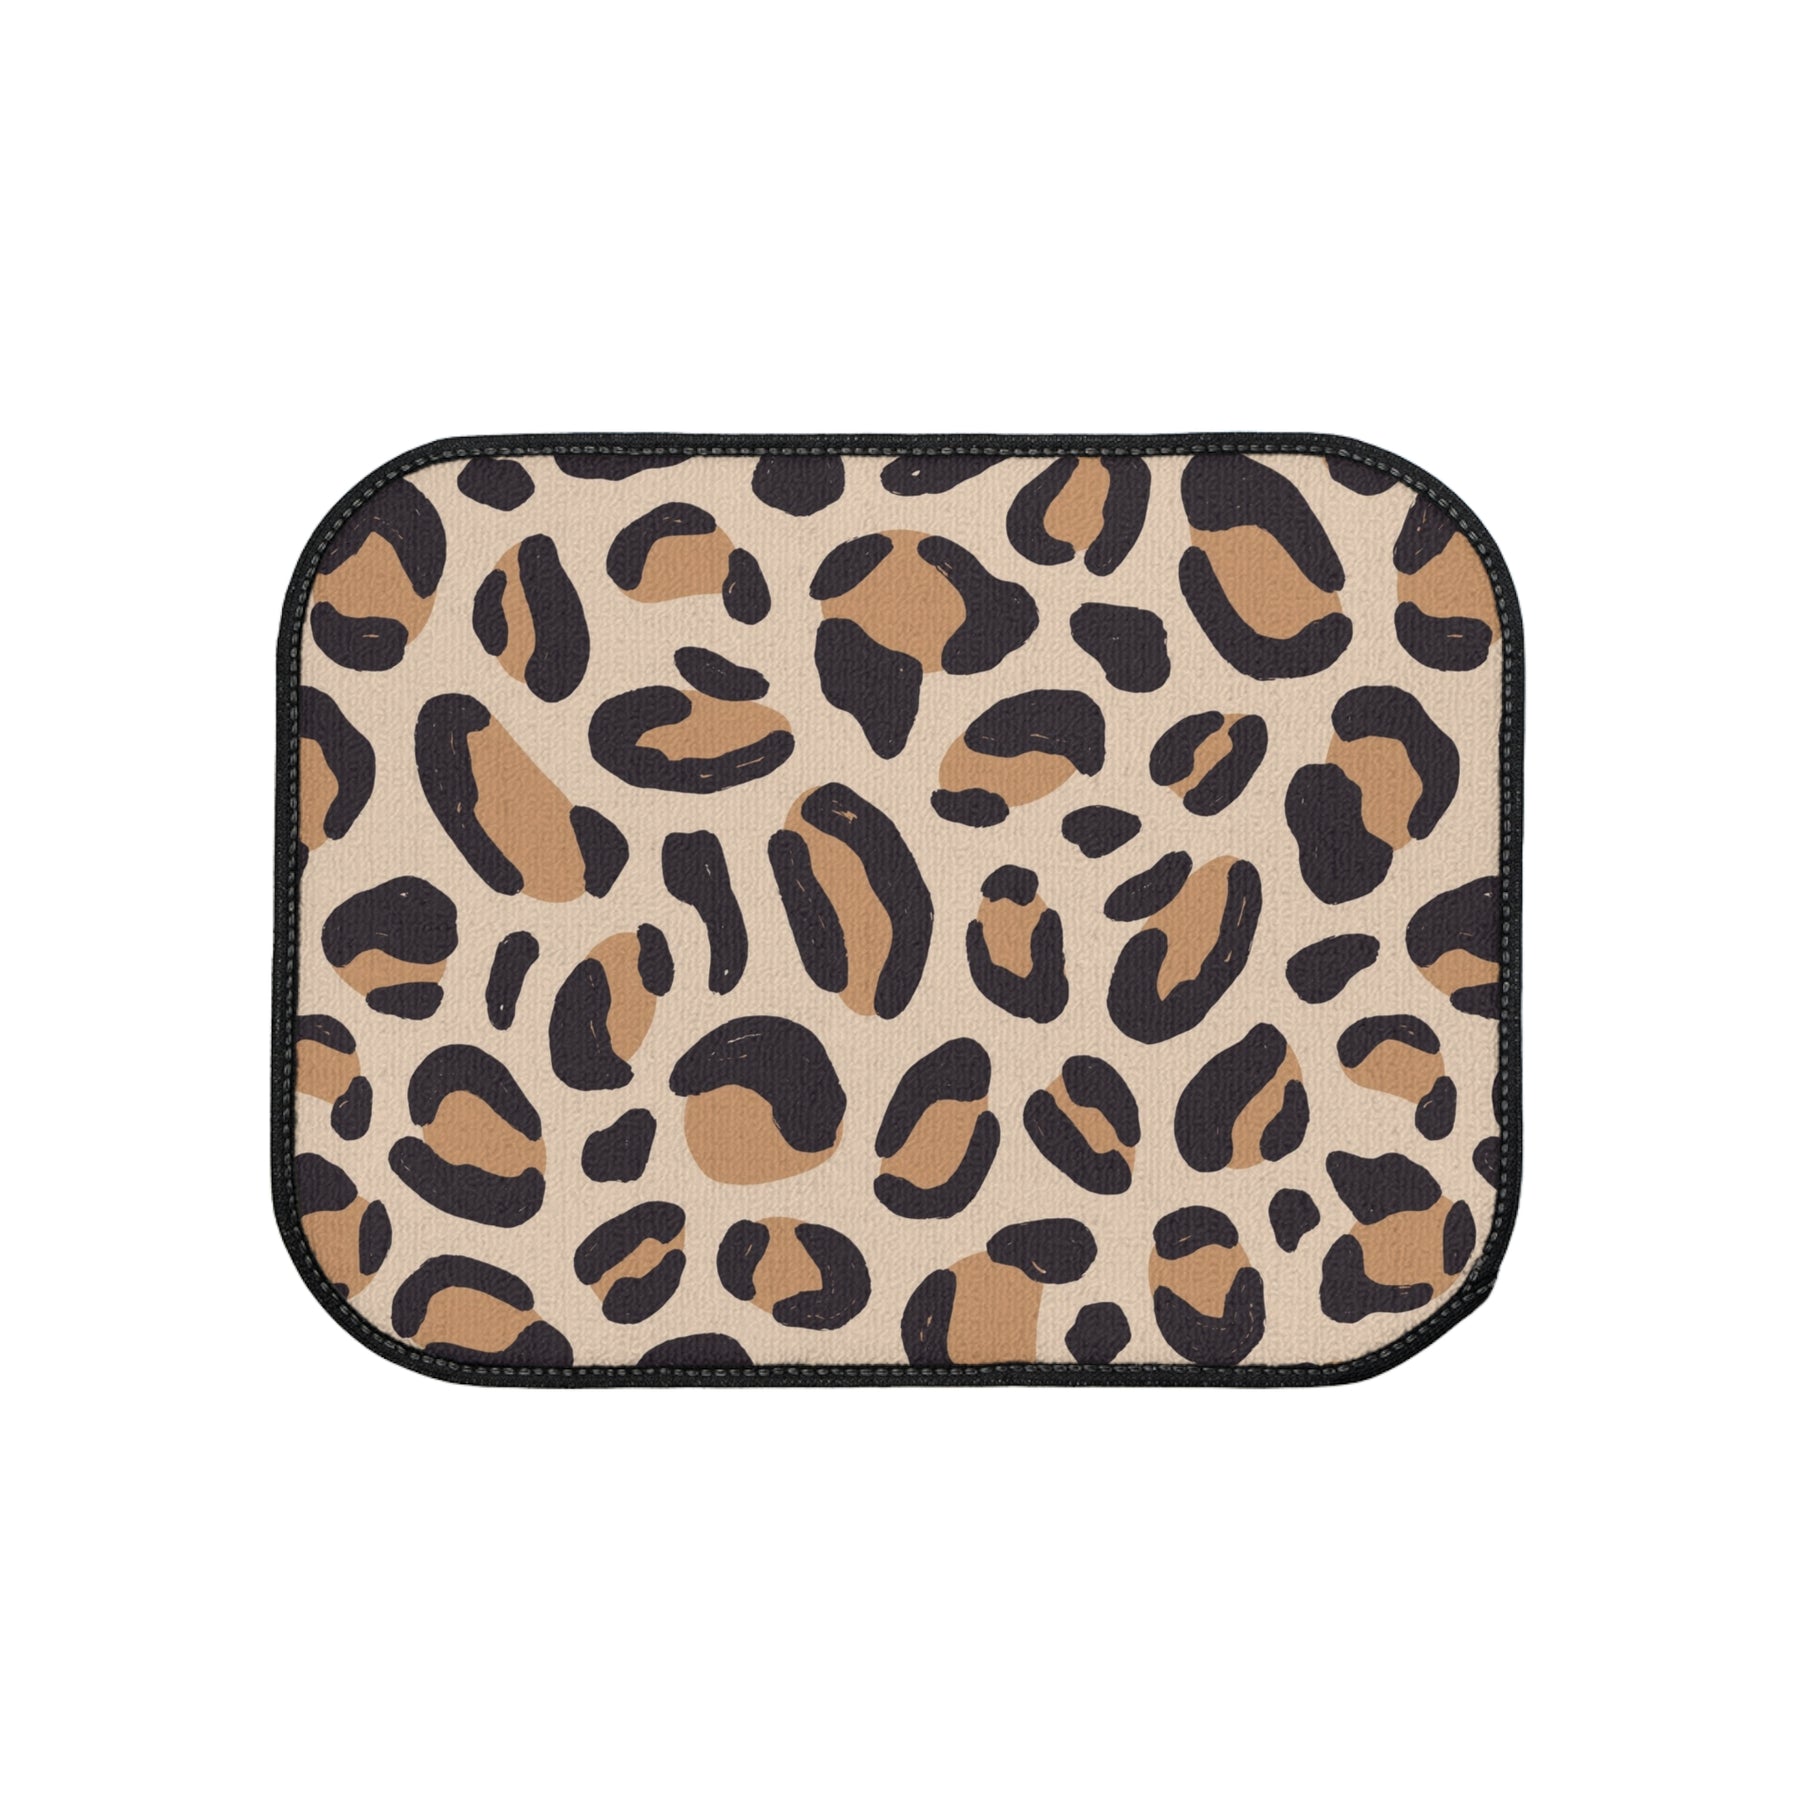 Animal Print Car Floor Mat,Leopard skin print Car Floor Mat,Cute Car Accessories for women,boho car mats,boho interior car decor